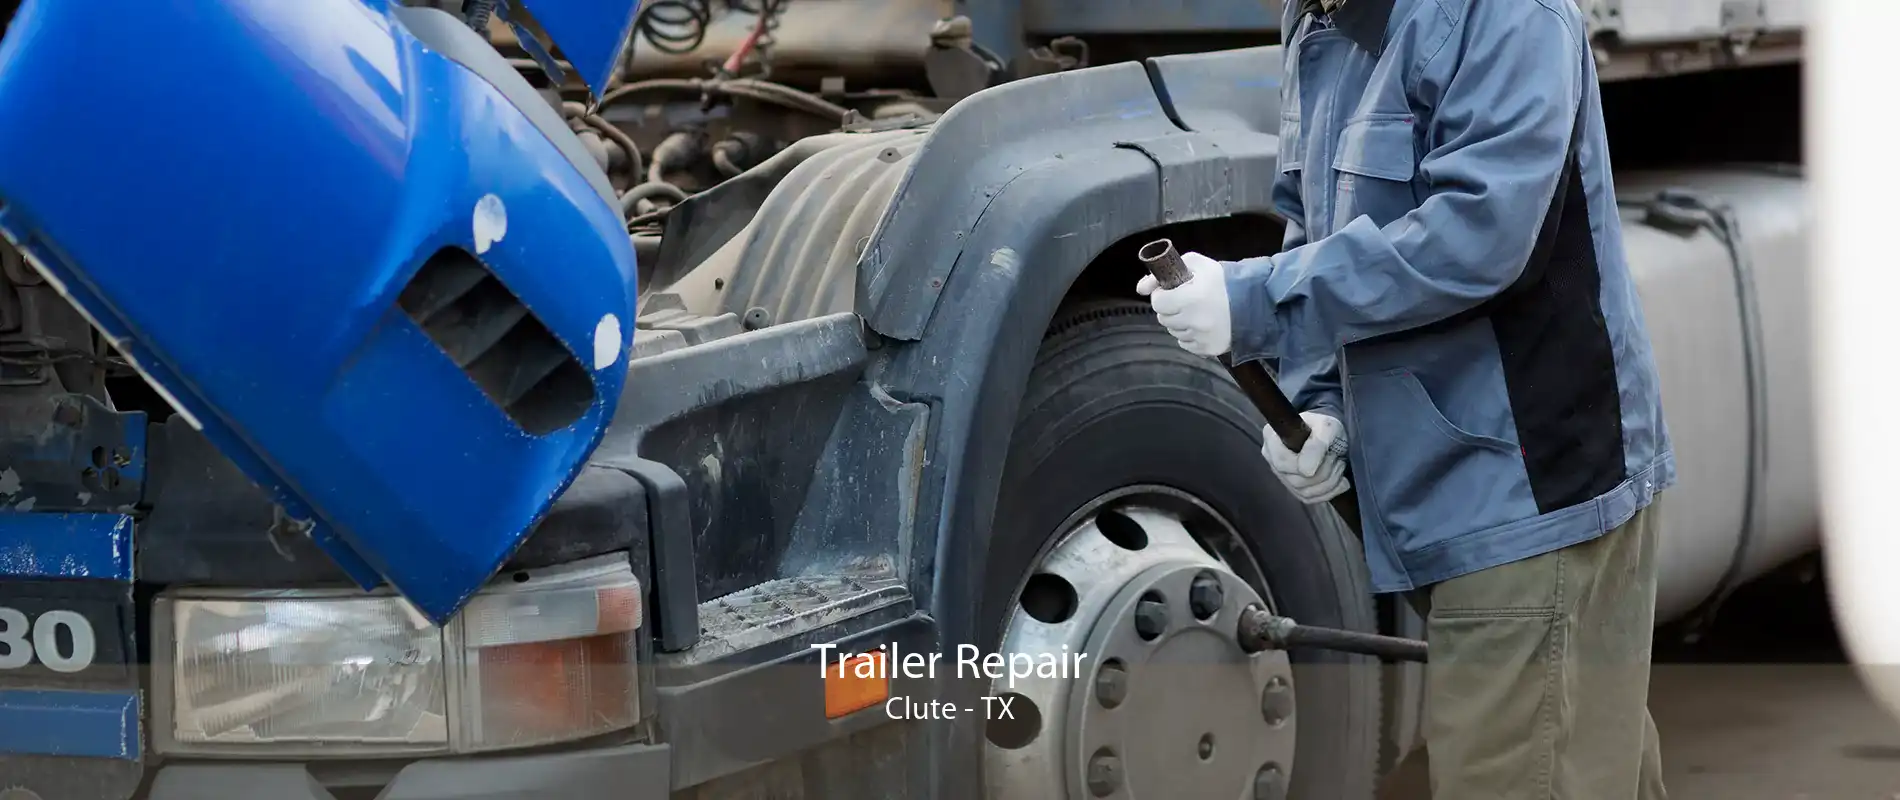 Trailer Repair Clute - TX